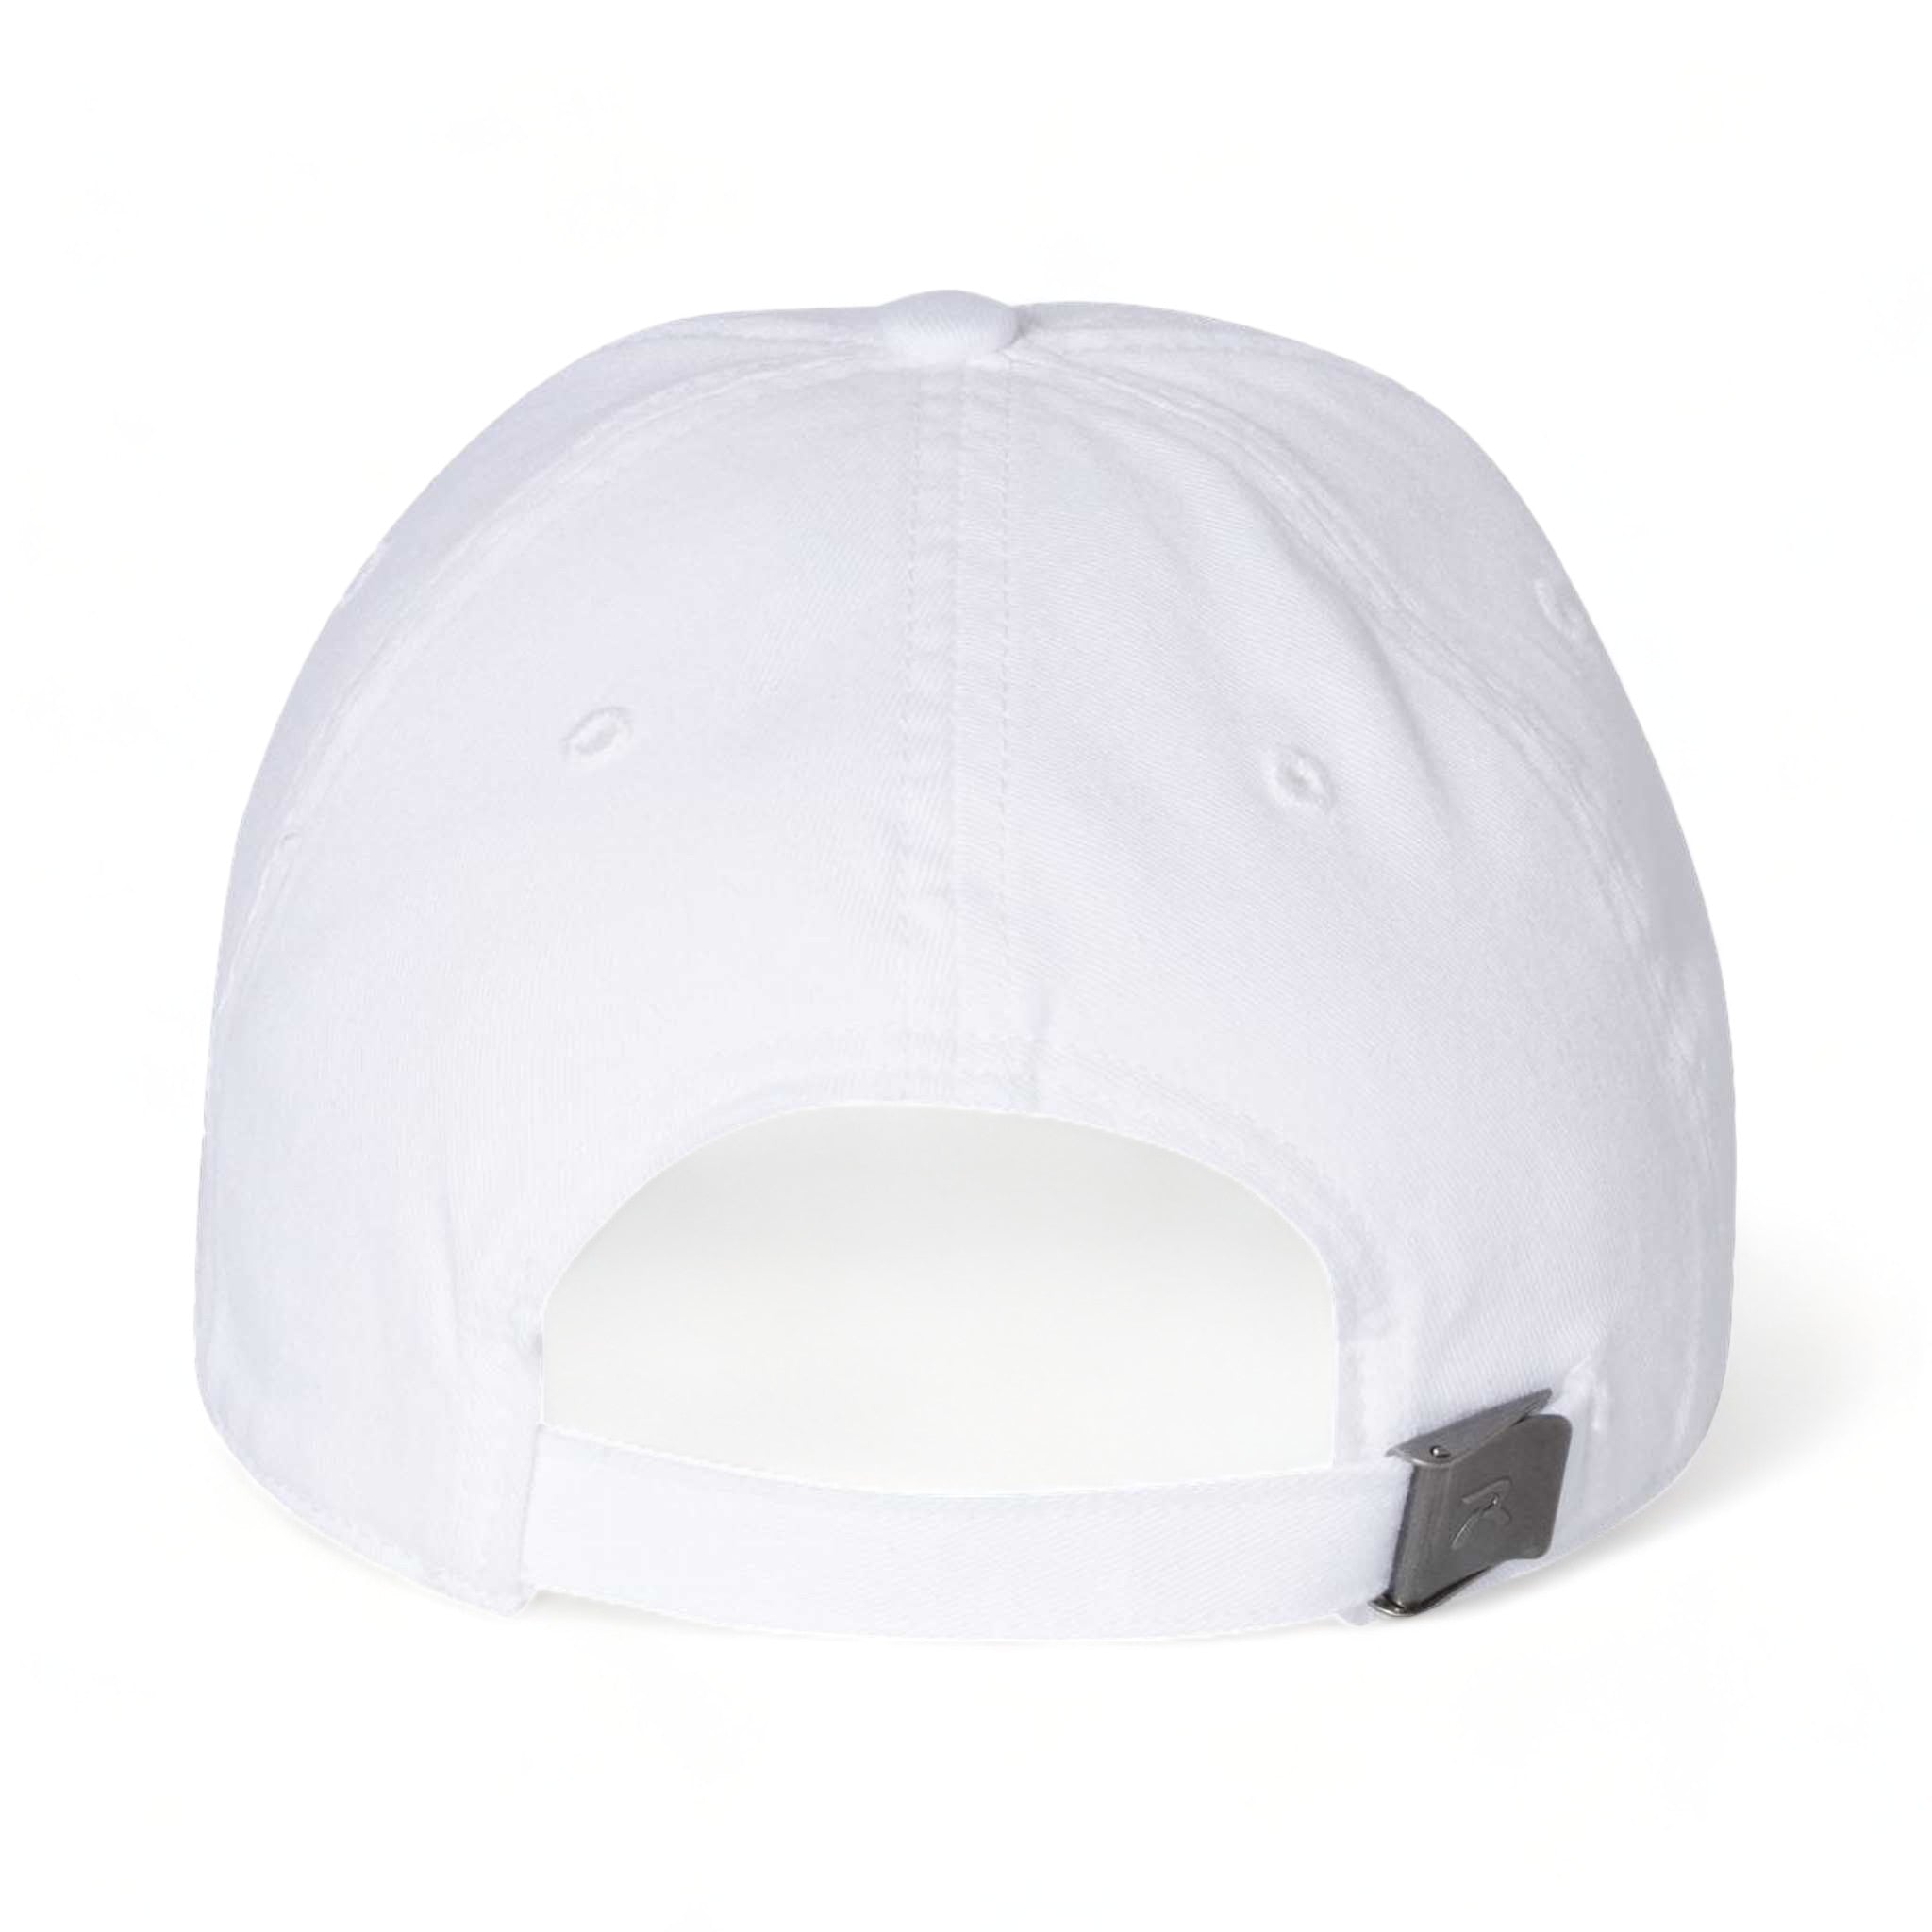 Back view of Richardson 320 custom hat in white